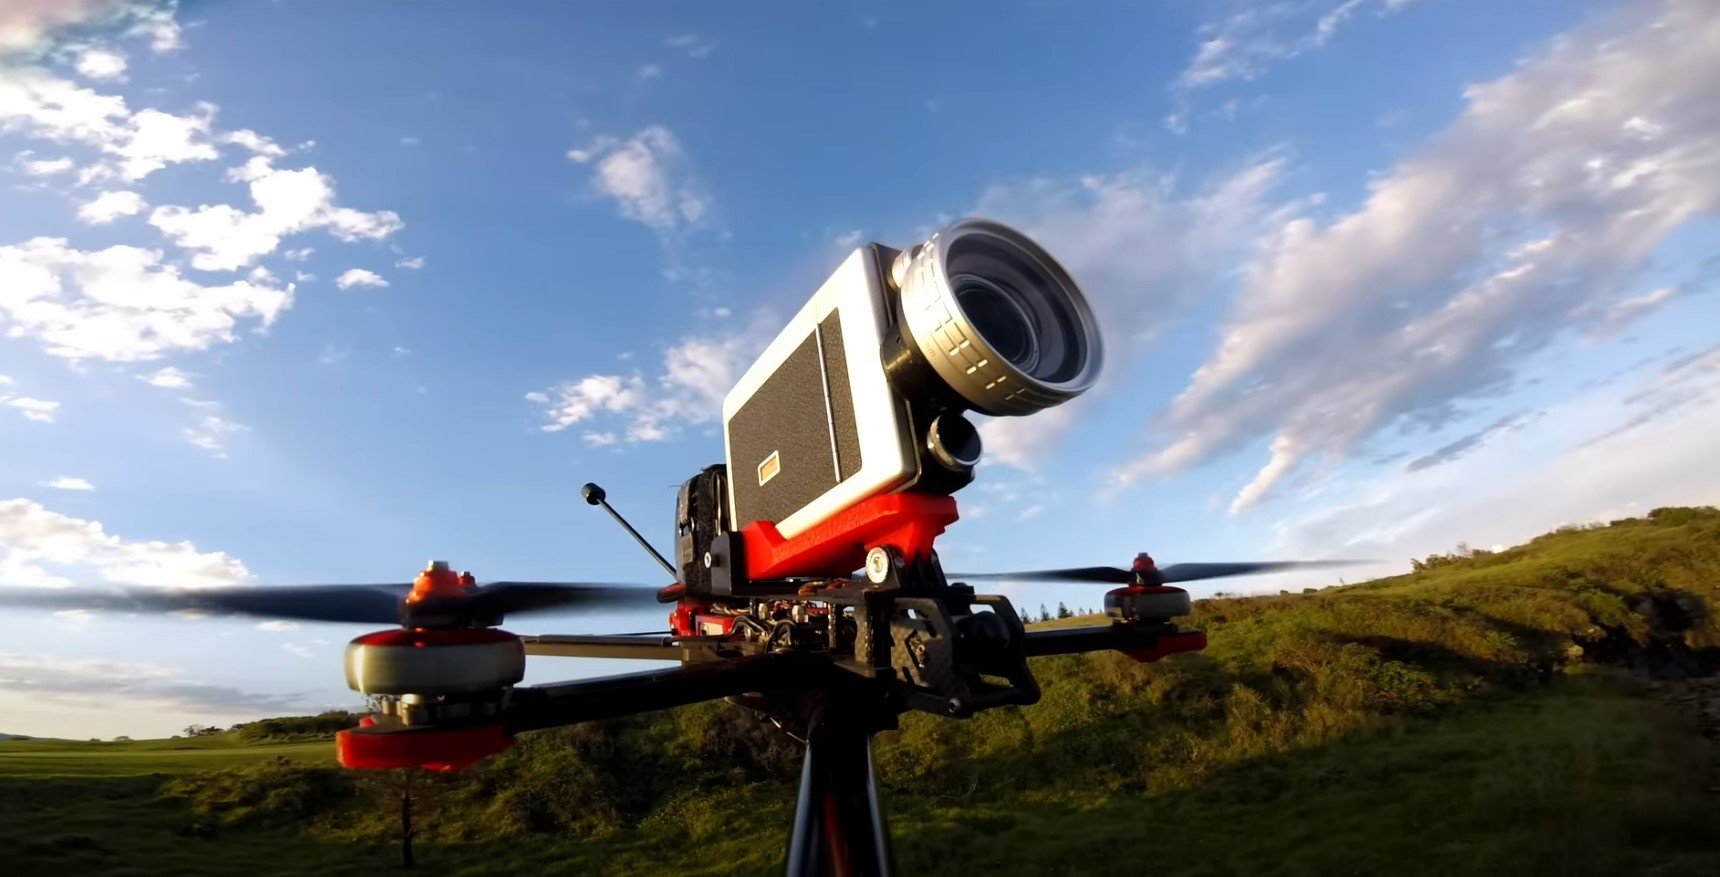 Super 8 film on a drone